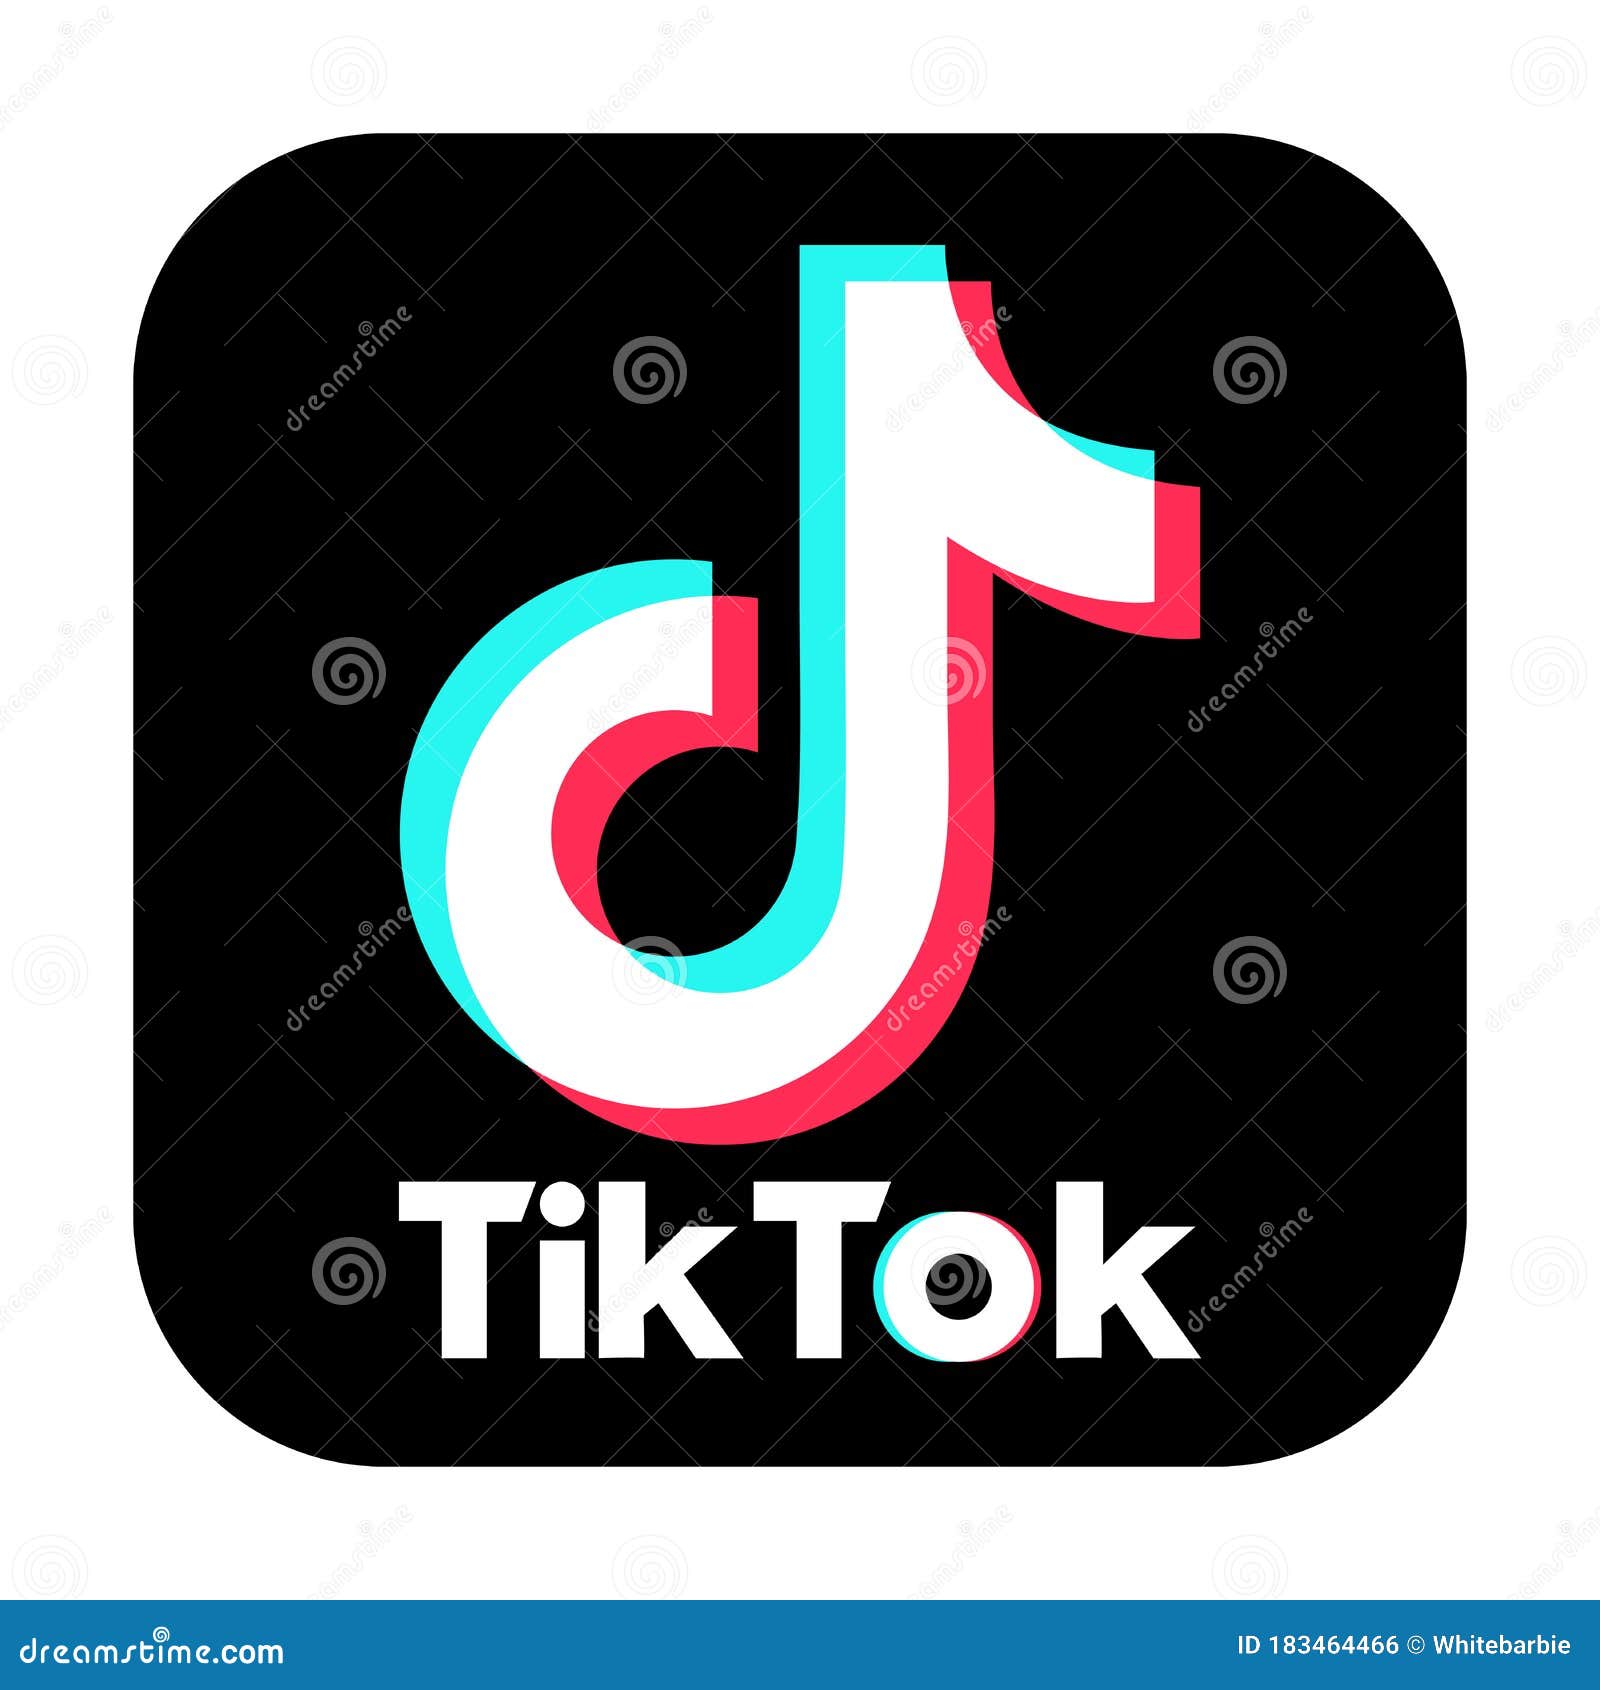 Follow Us on Tiktok